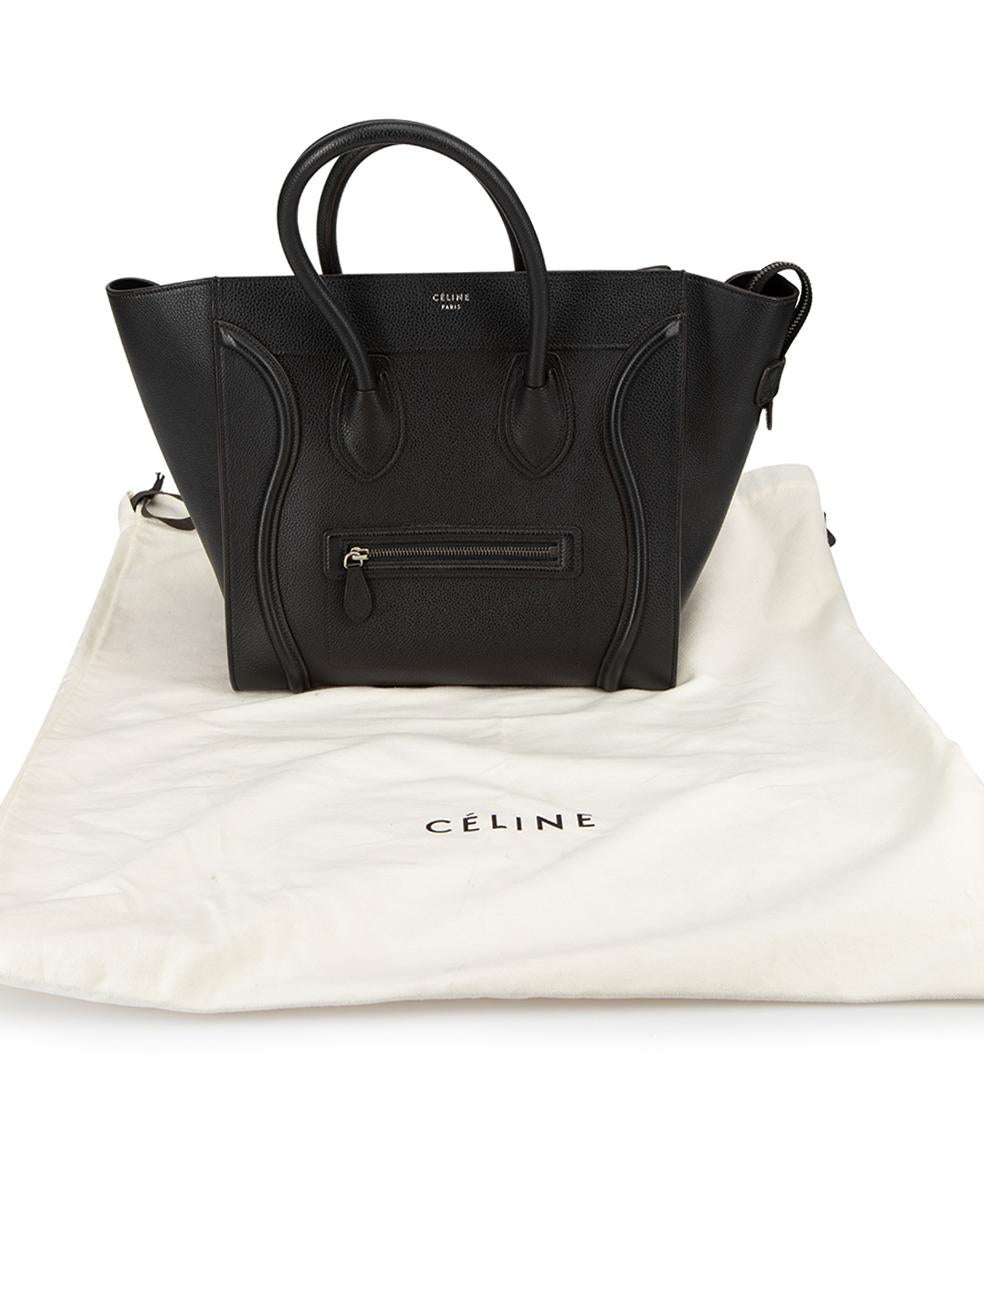 Céline Women's Black Leather Mini Luggage Tote 3